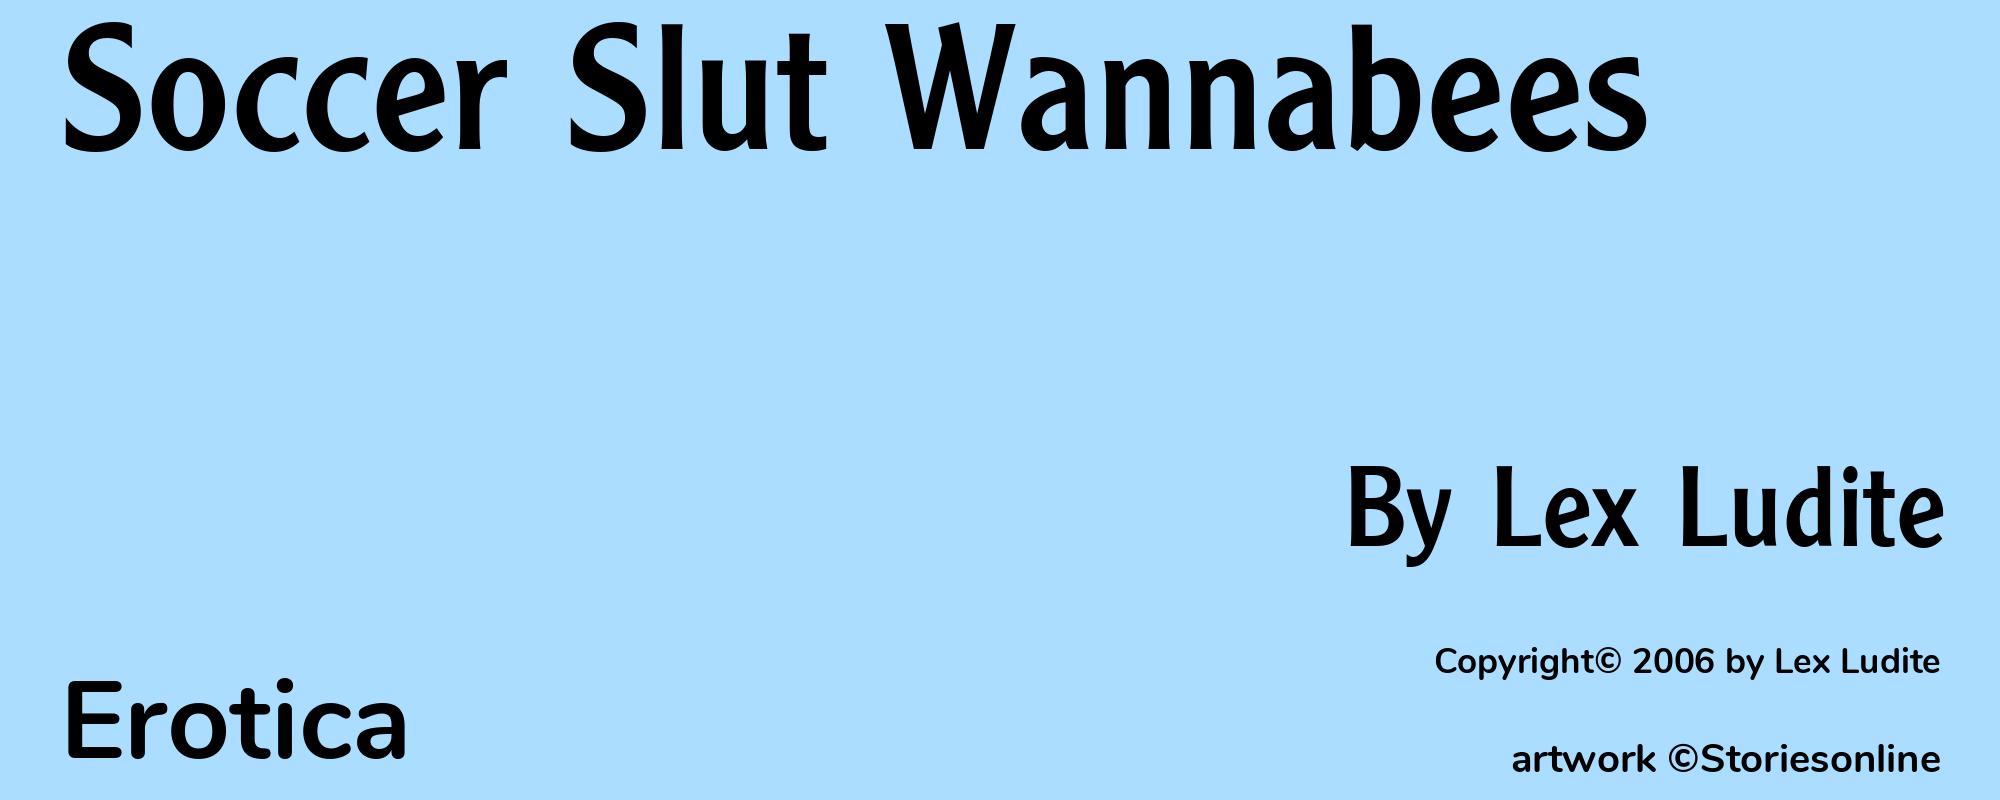 Soccer Slut Wannabees - Cover